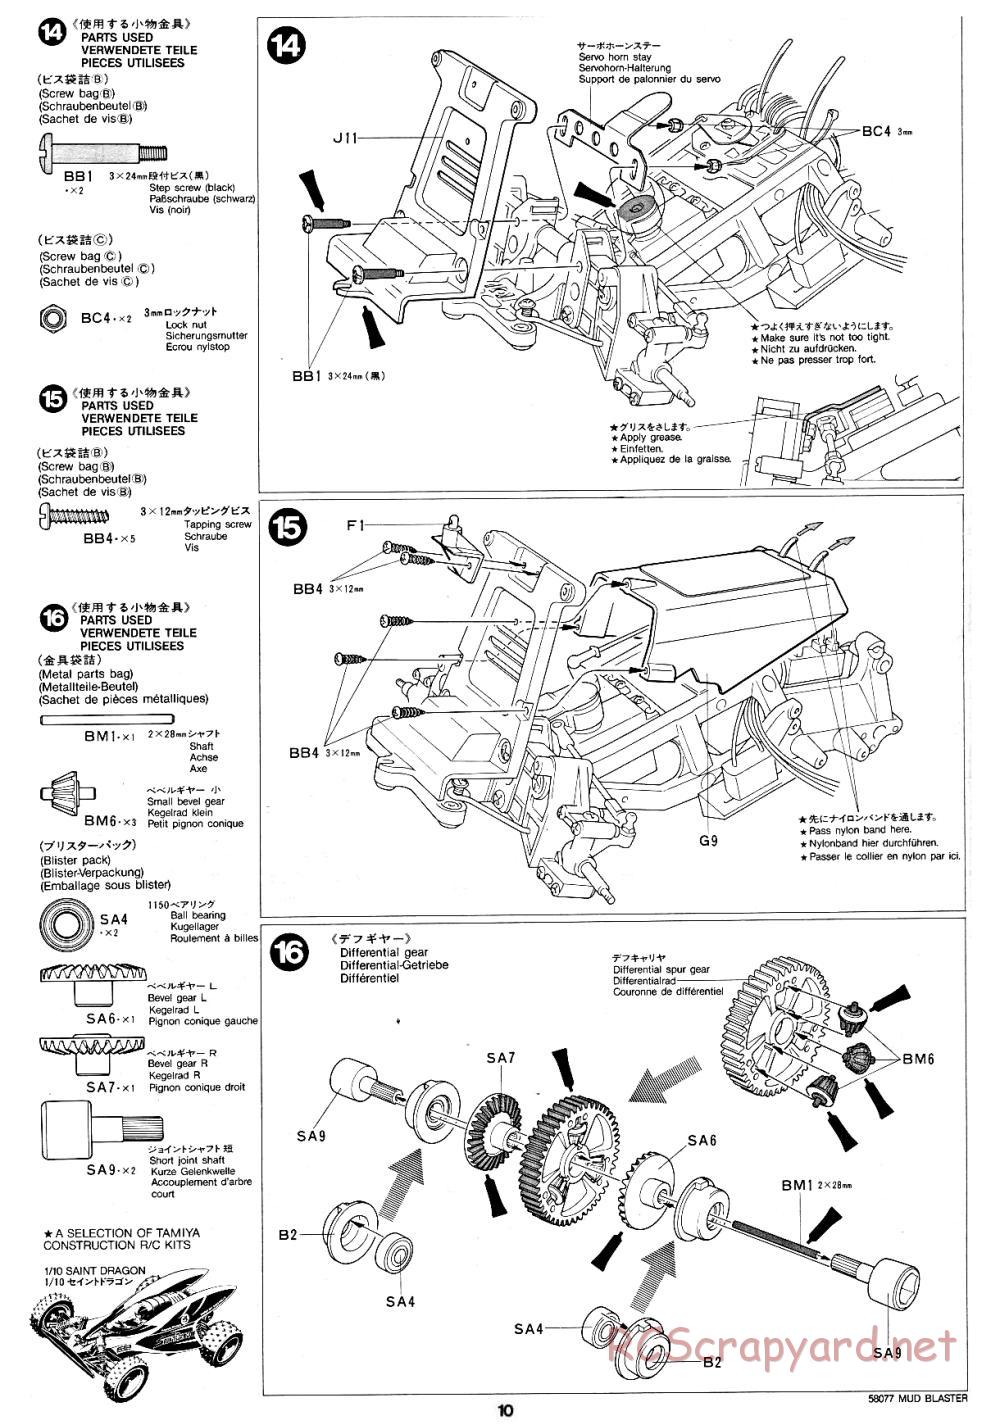 Tamiya - Mud Blaster - 58077 - Manual - Page 10